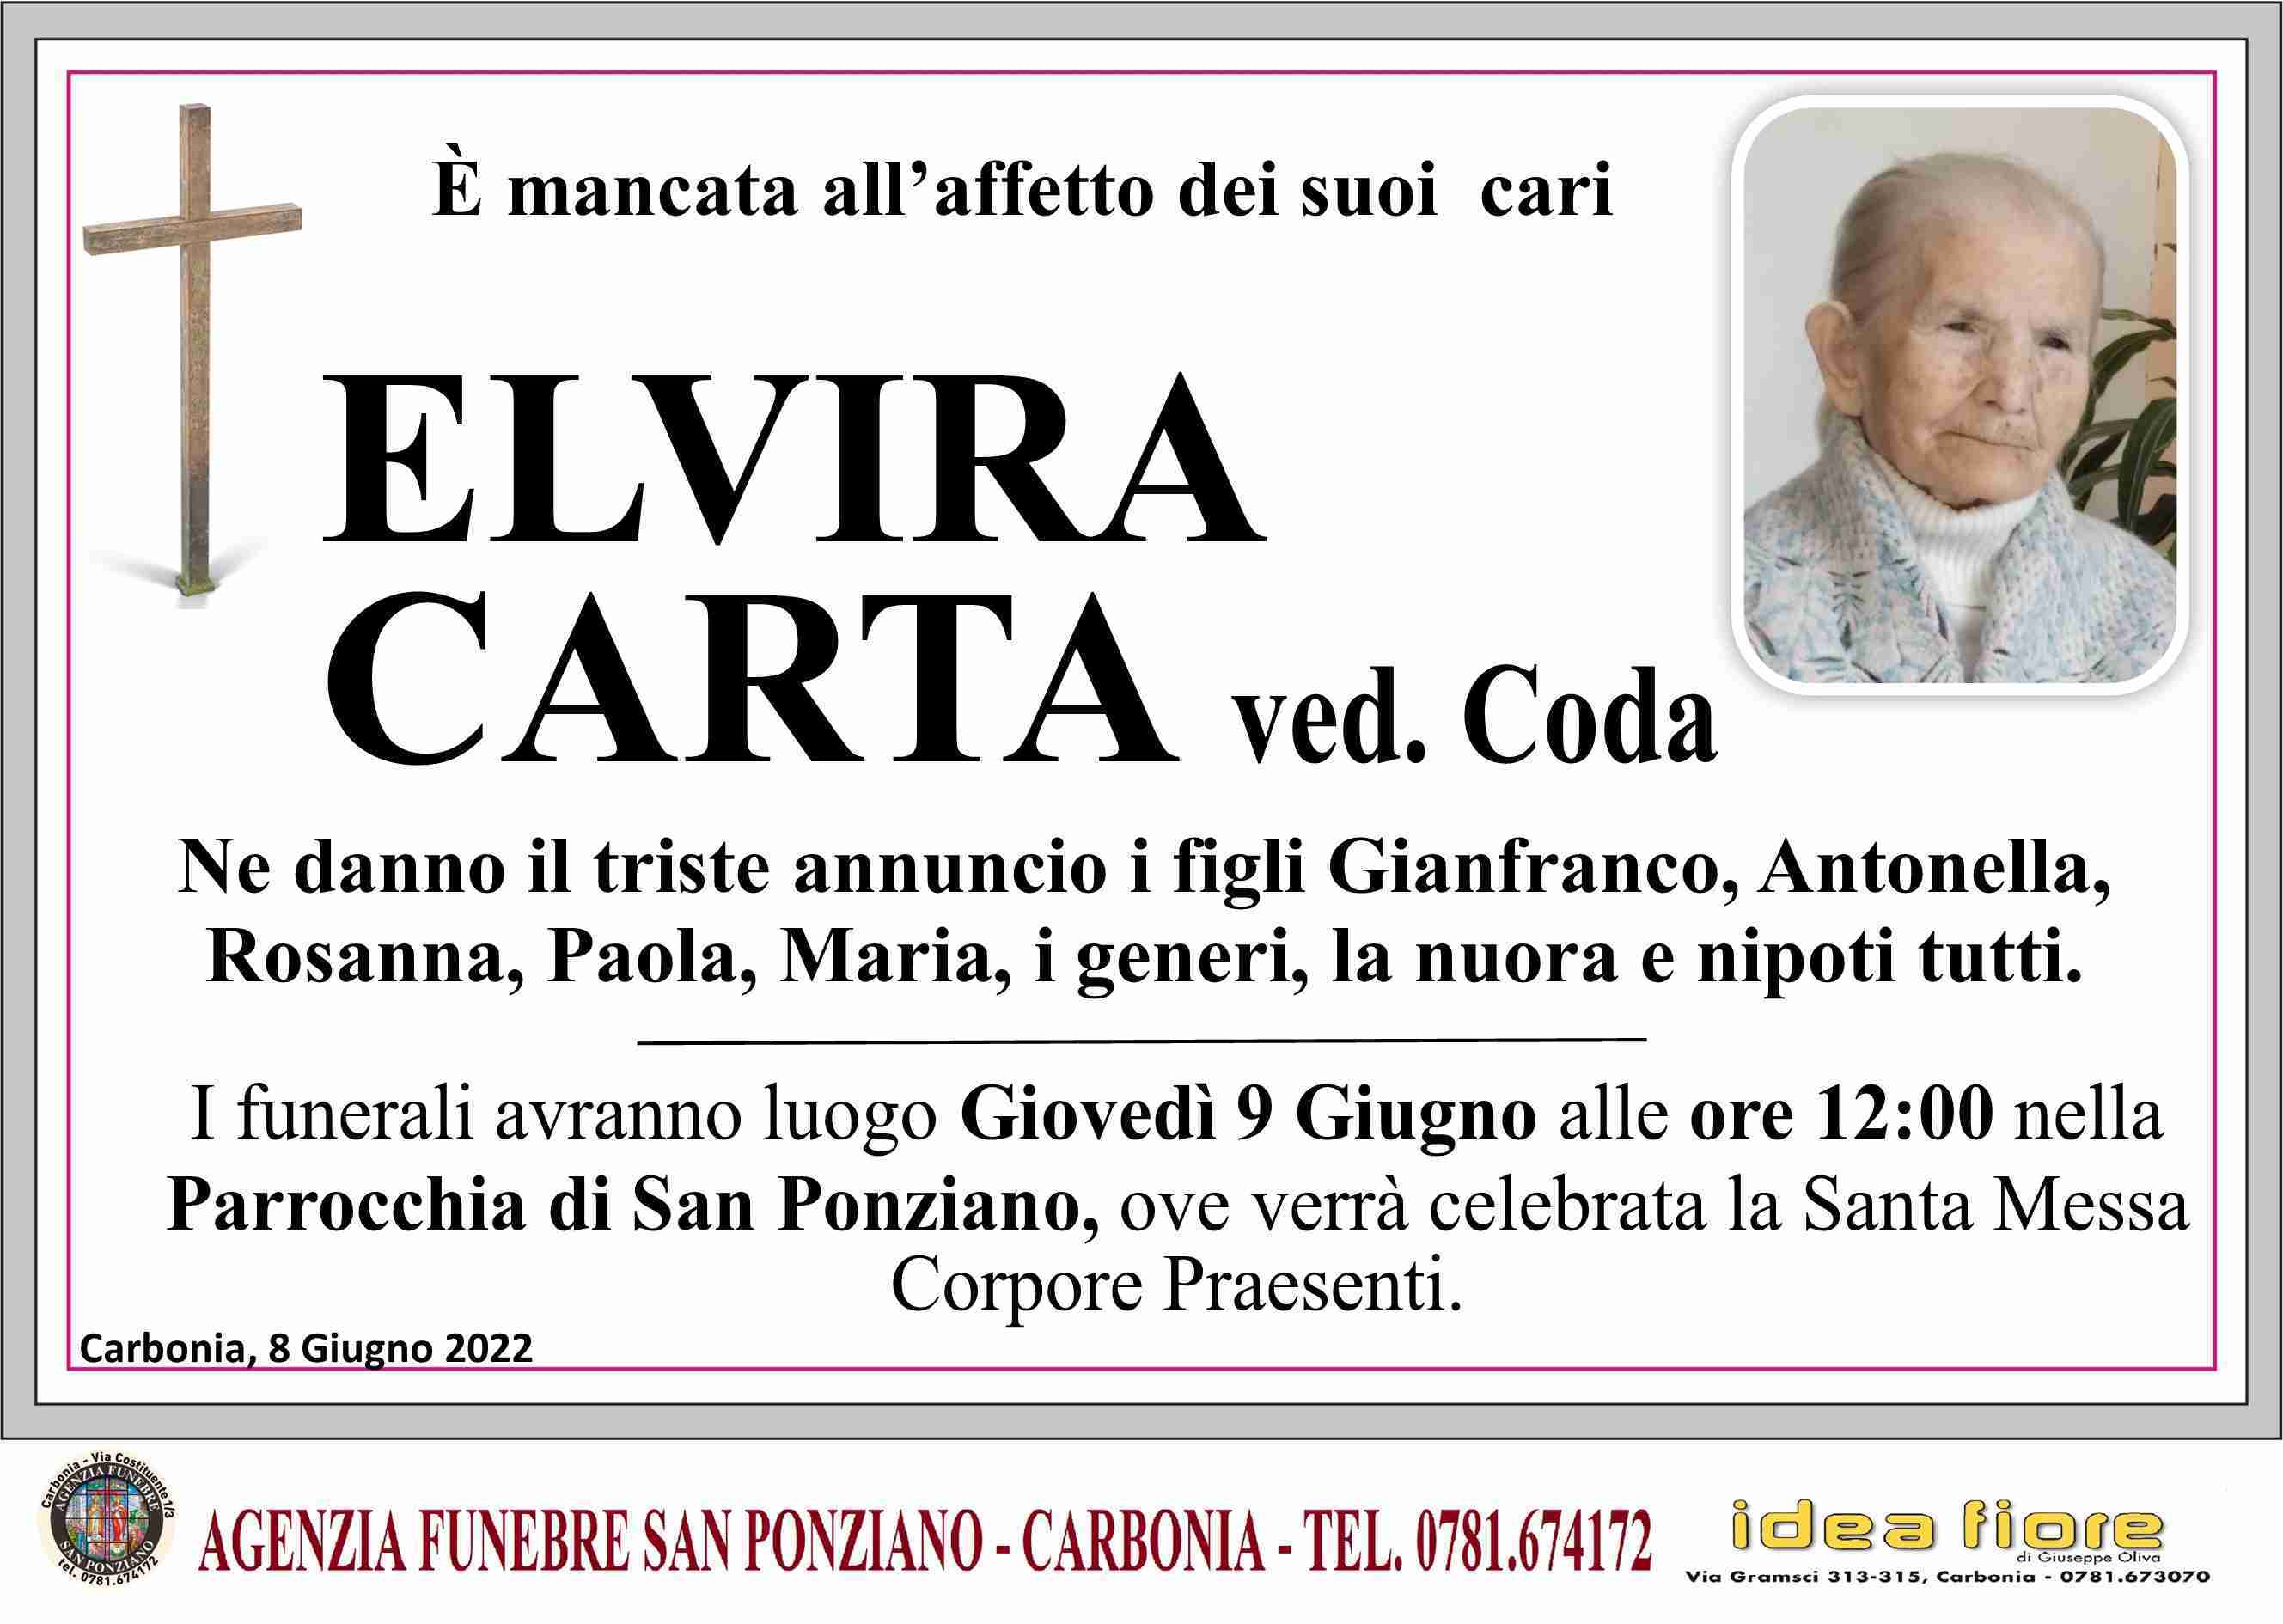 Elvira Carta